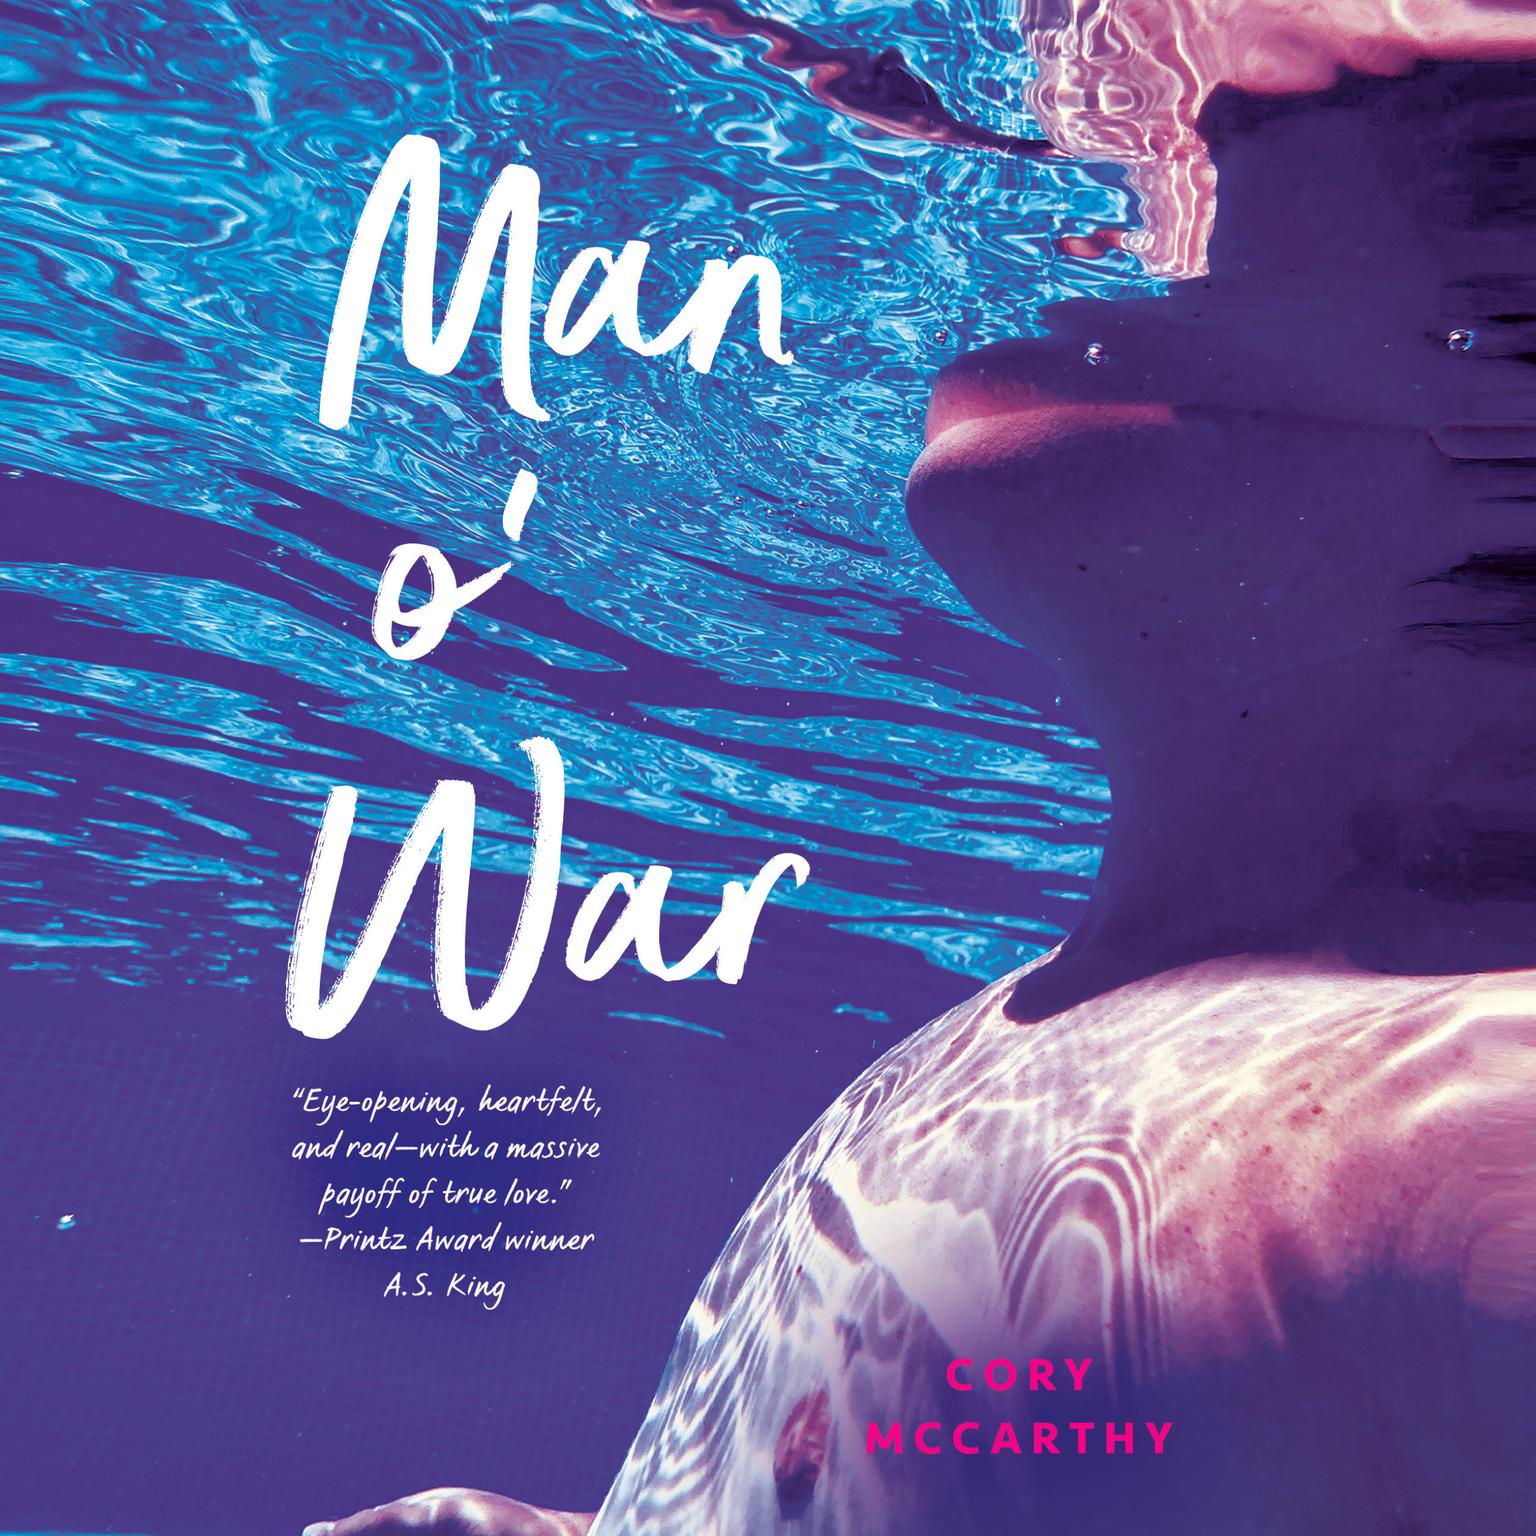 Man o War Audiobook, by Cori McCarthy